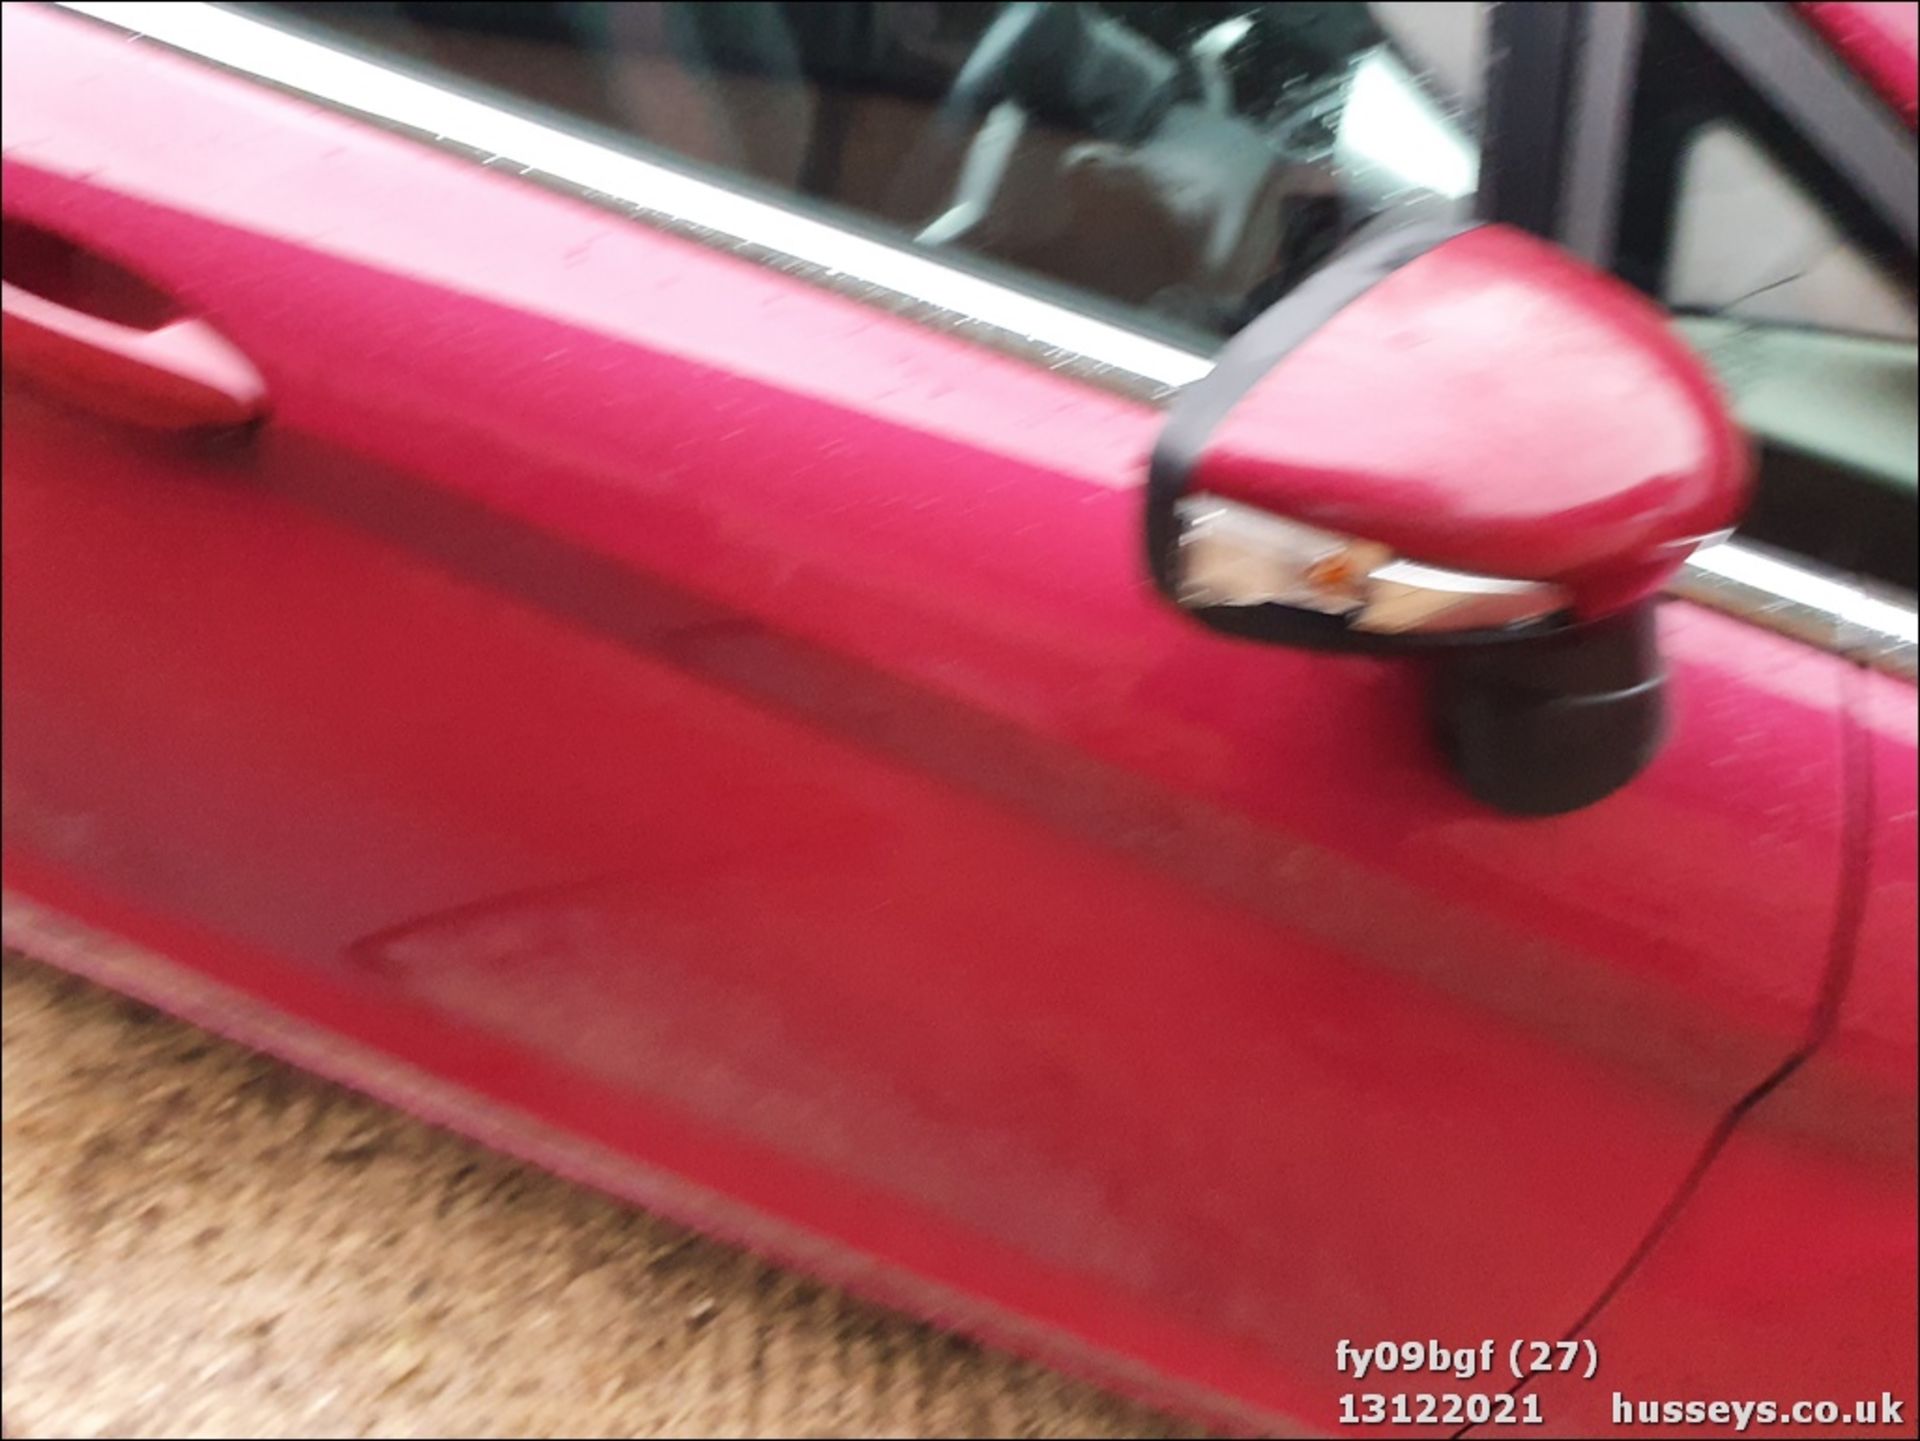 09/09 FORD FIESTA TITANIUM 90 TDCI - 1560cc 5dr Hatchback (Red, 125k) - Image 27 of 34